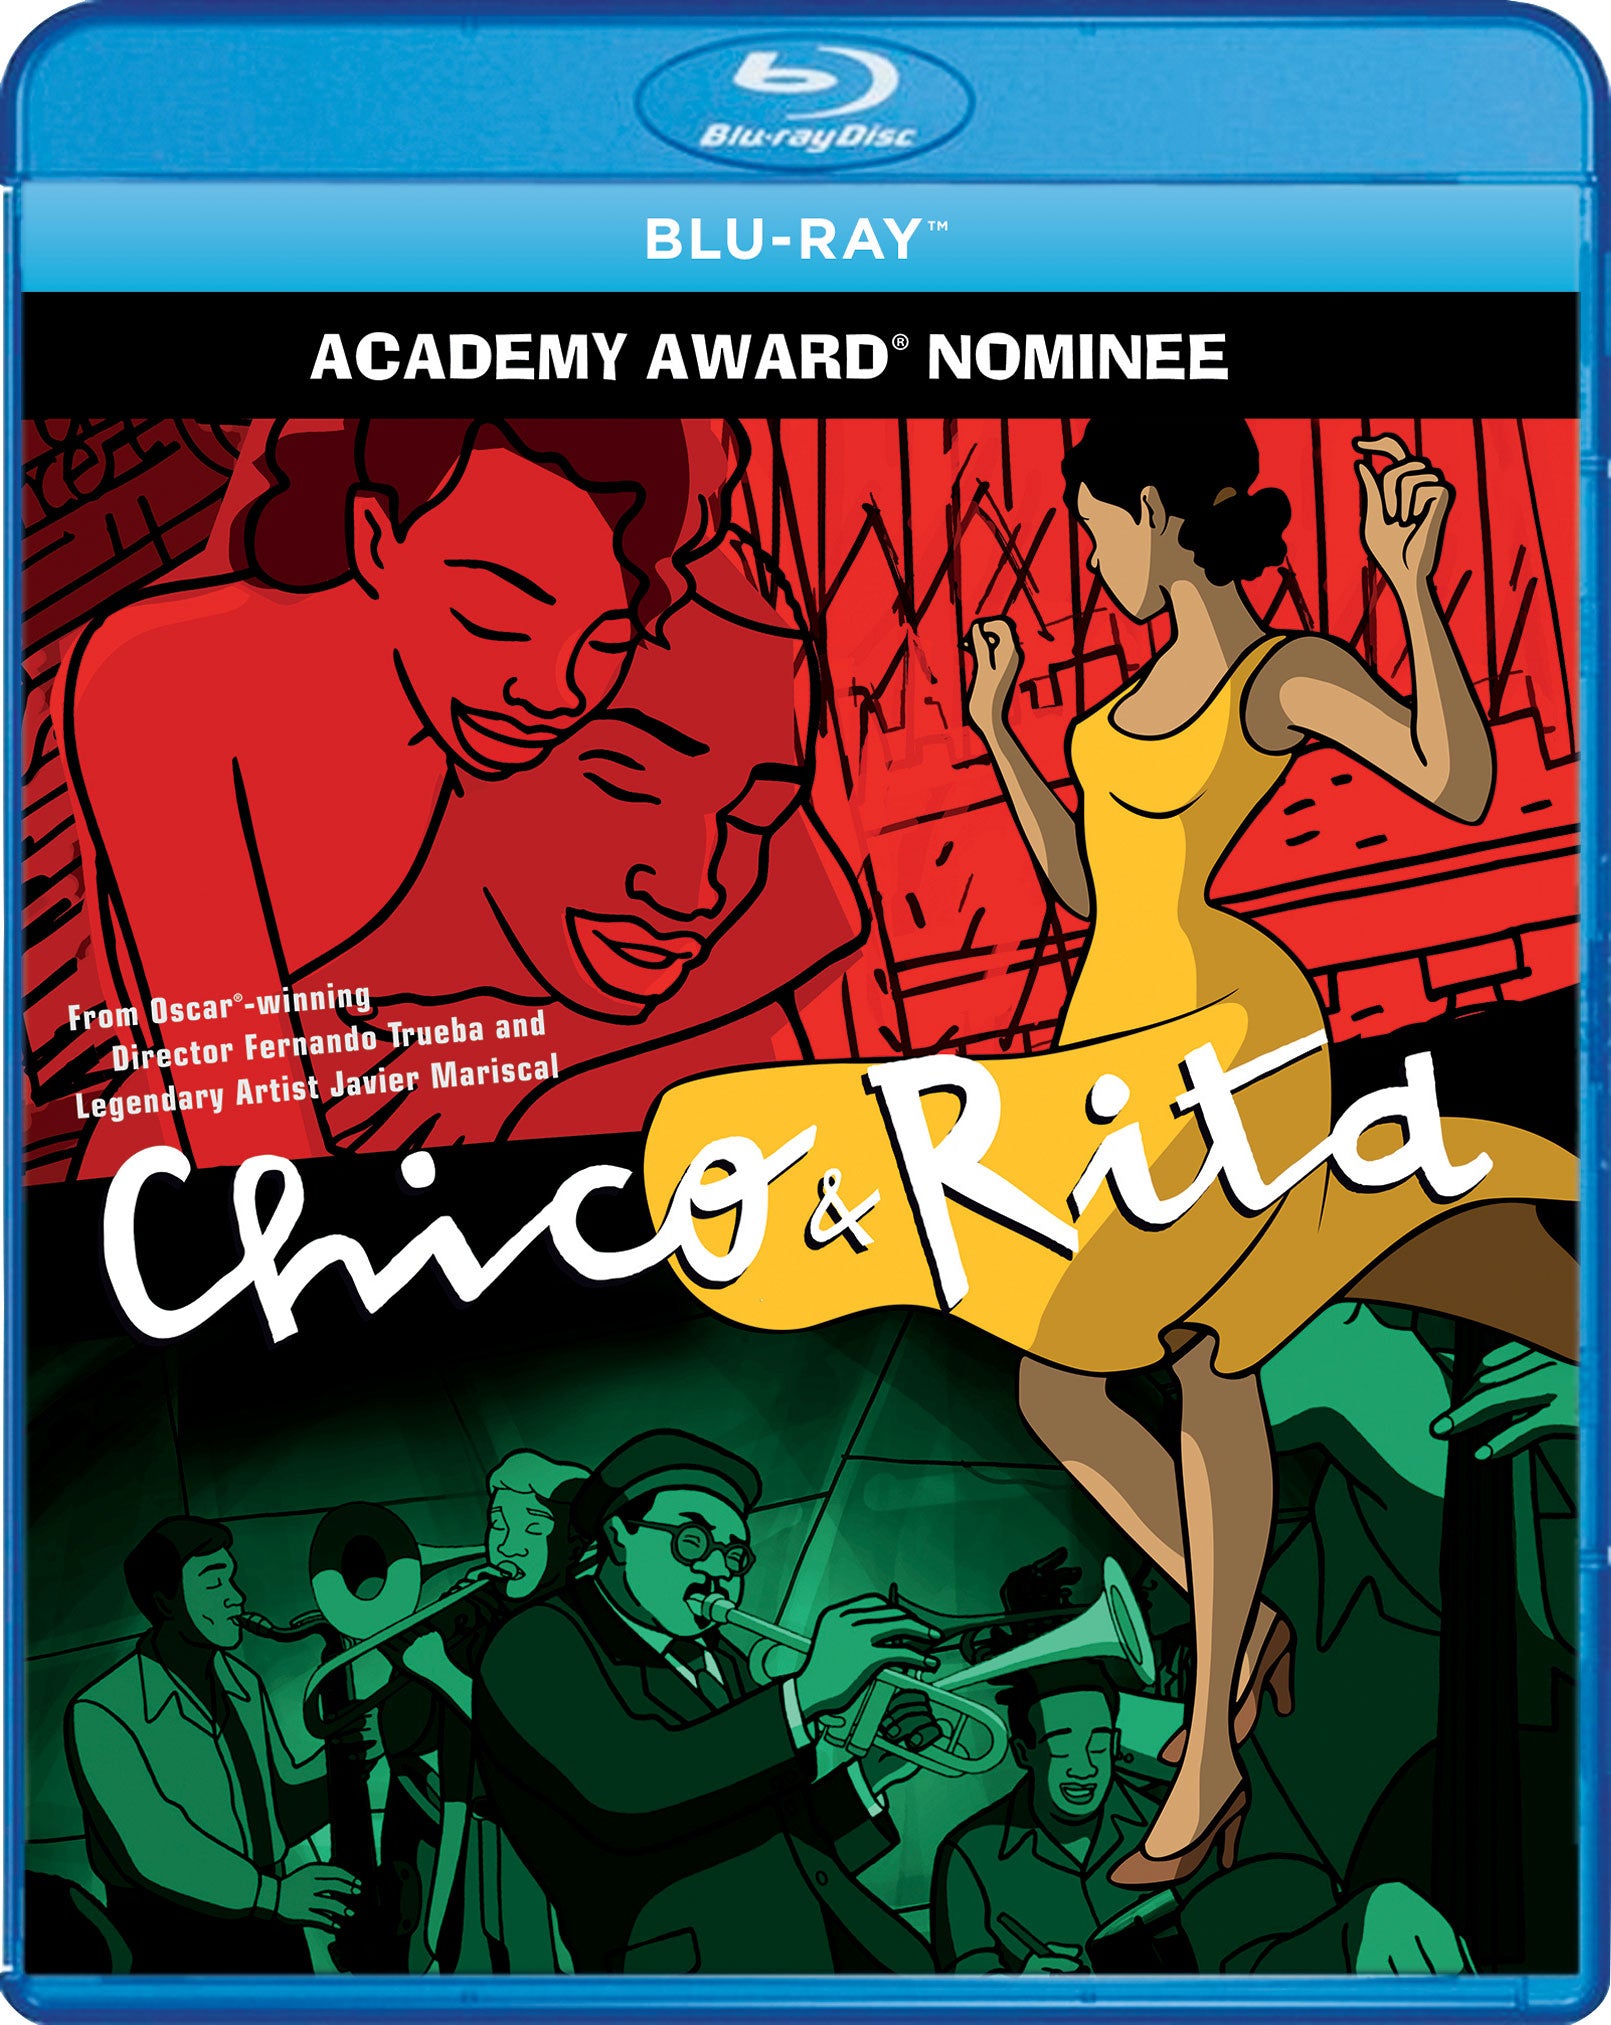 Chico and Rita [Blu-ray] cover art